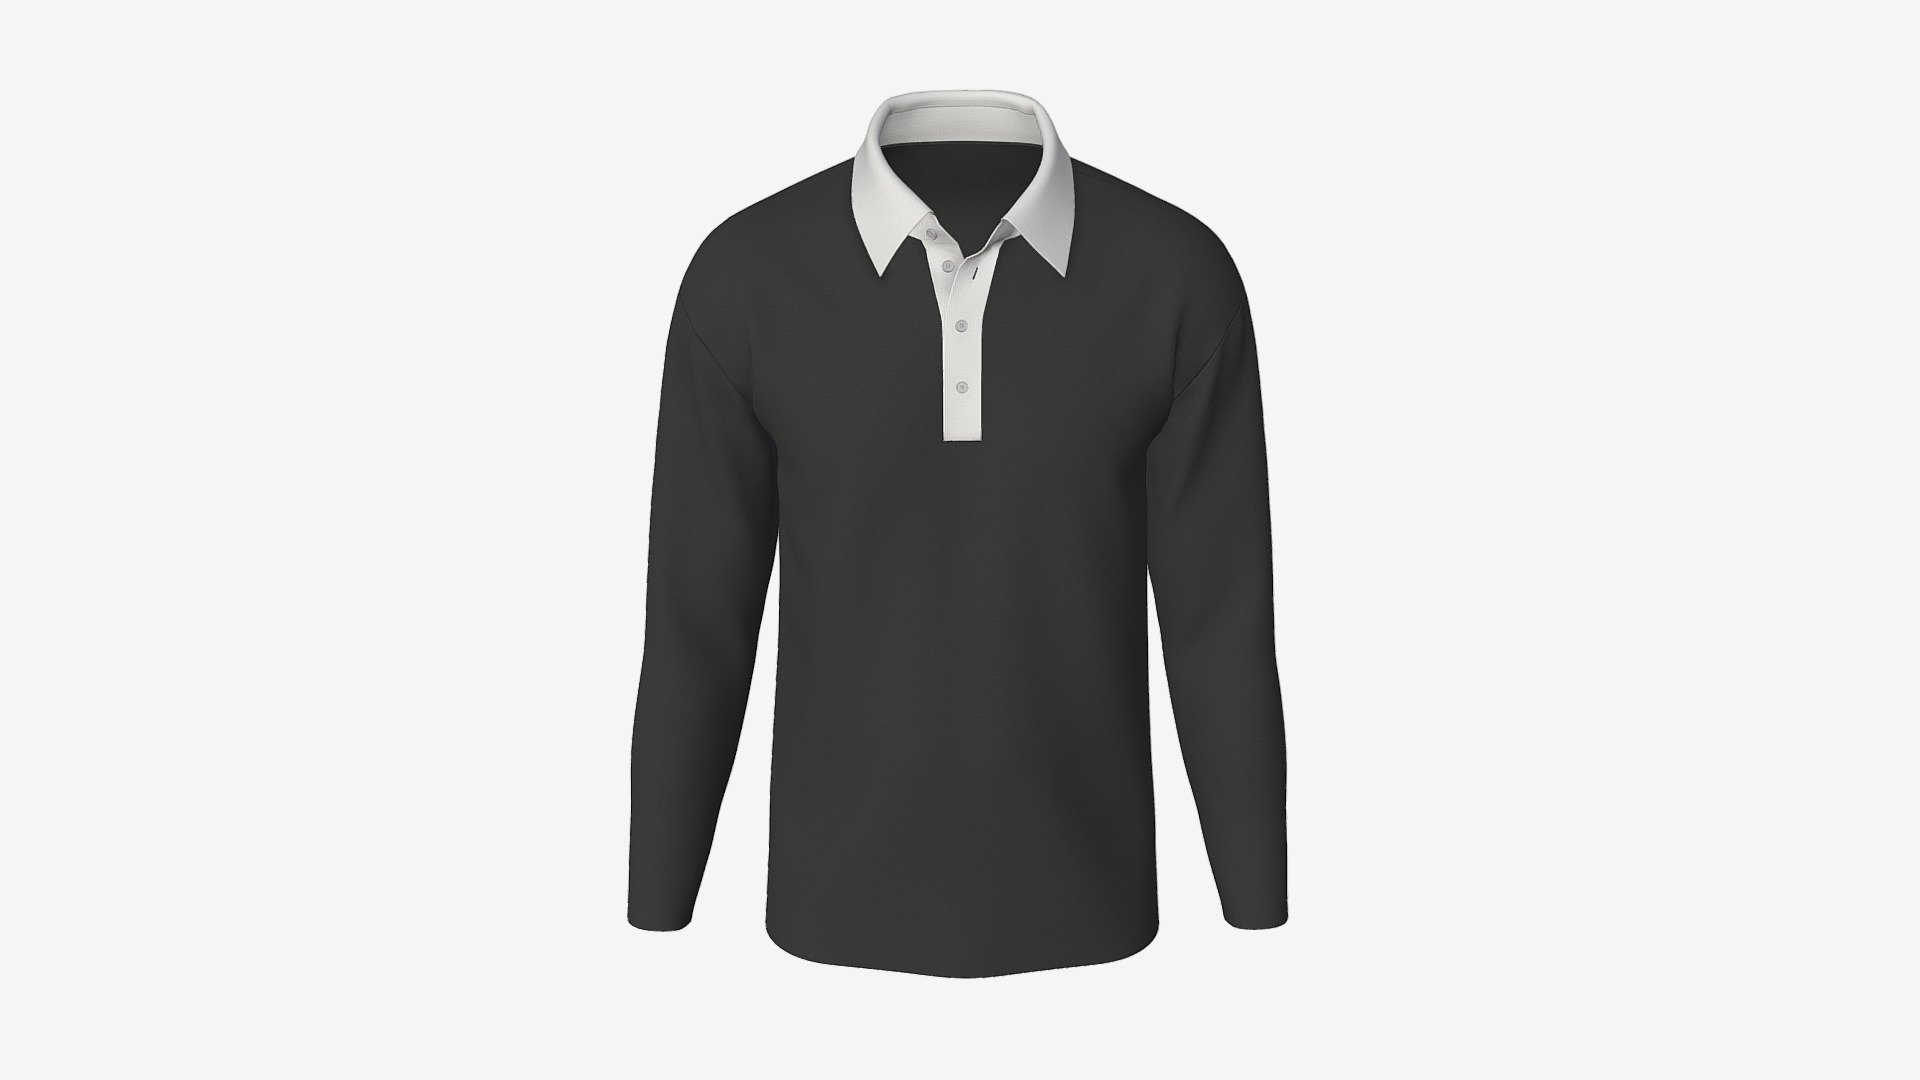 Long Sleeve Polo Shirt for Men Mockup 01 Black - Buy Royalty Free 3D ...